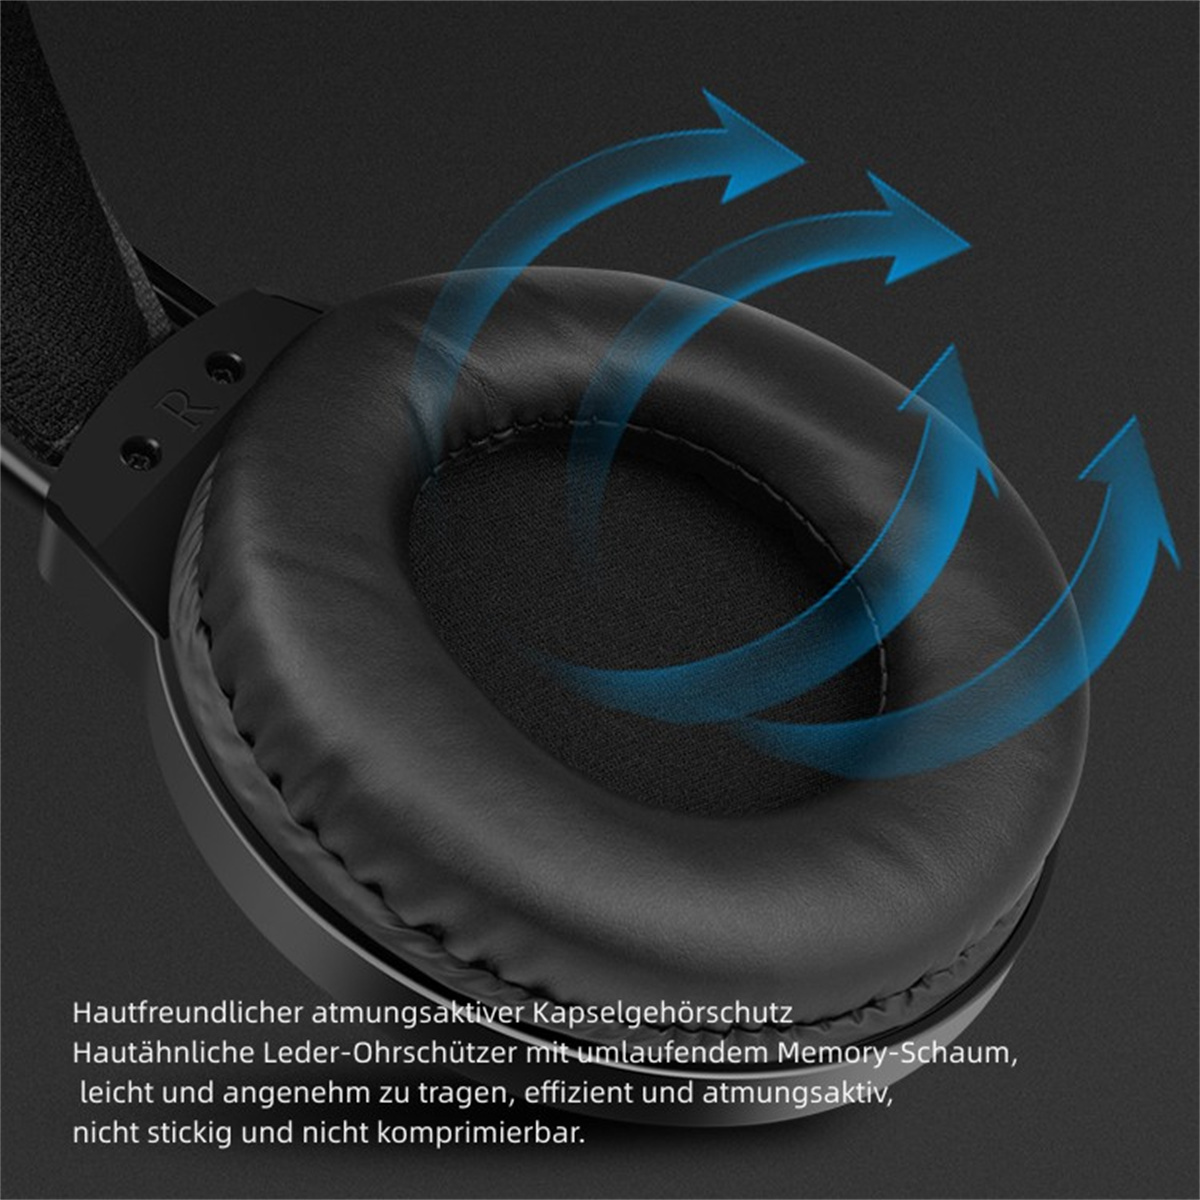 SYNTEK Rosa Headset empfindlich, - Rosa Gaming Over-the-Head Blenden, Headset Buntes Over-ear